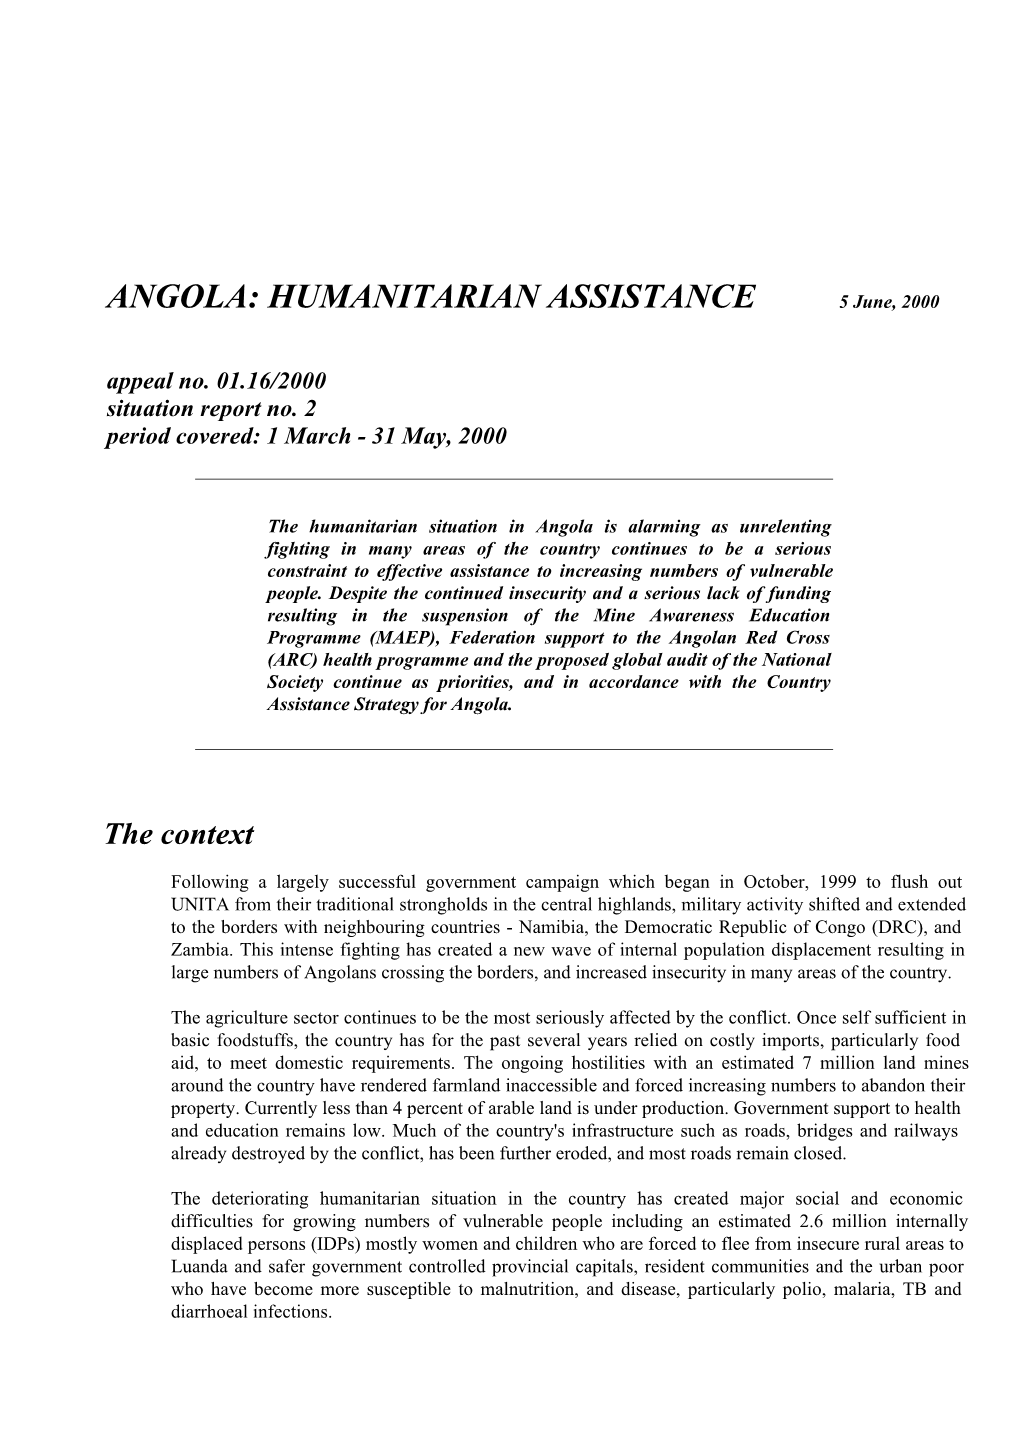 ANGOLA: HUMANITARIAN ASSISTANCE the Context